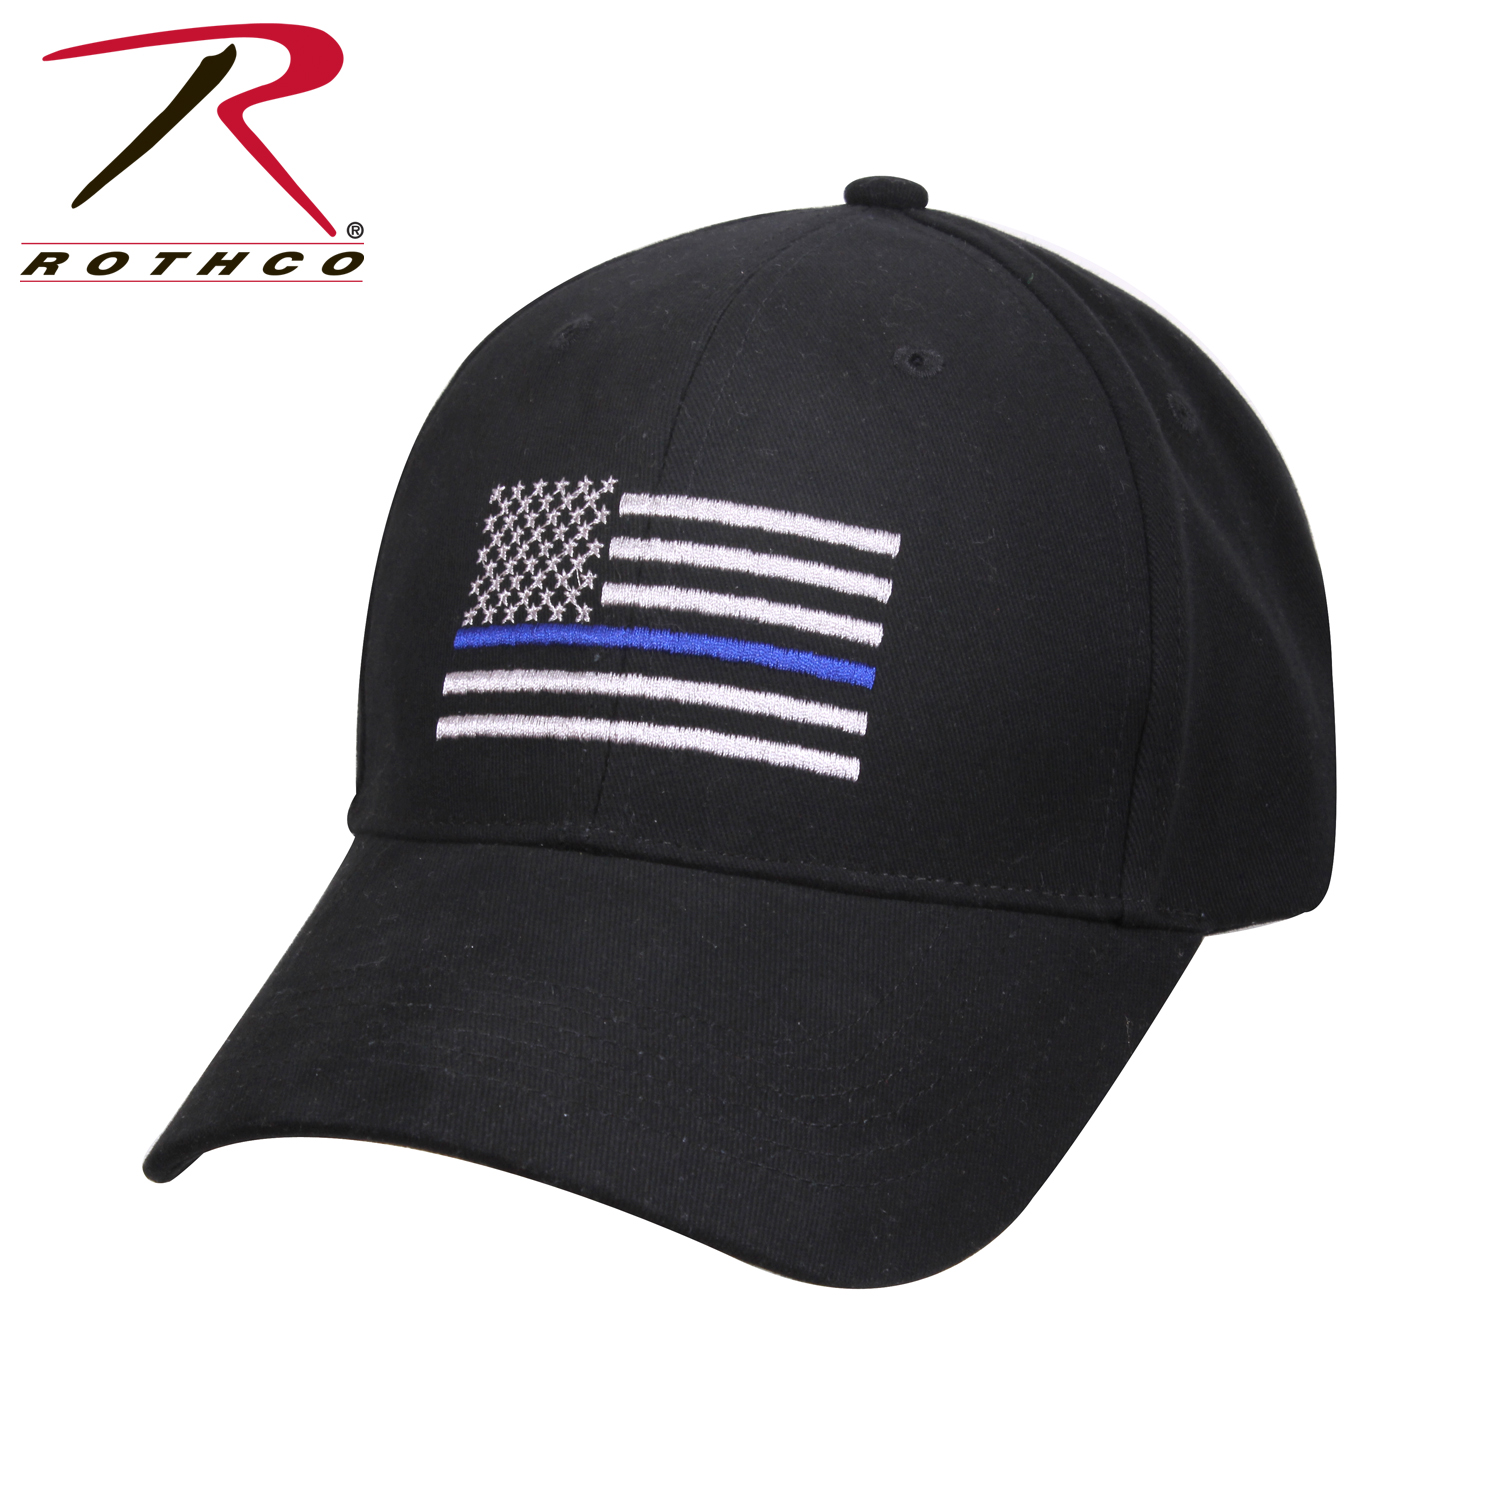 Ball Cap-Black with Thin Blue Line Flag